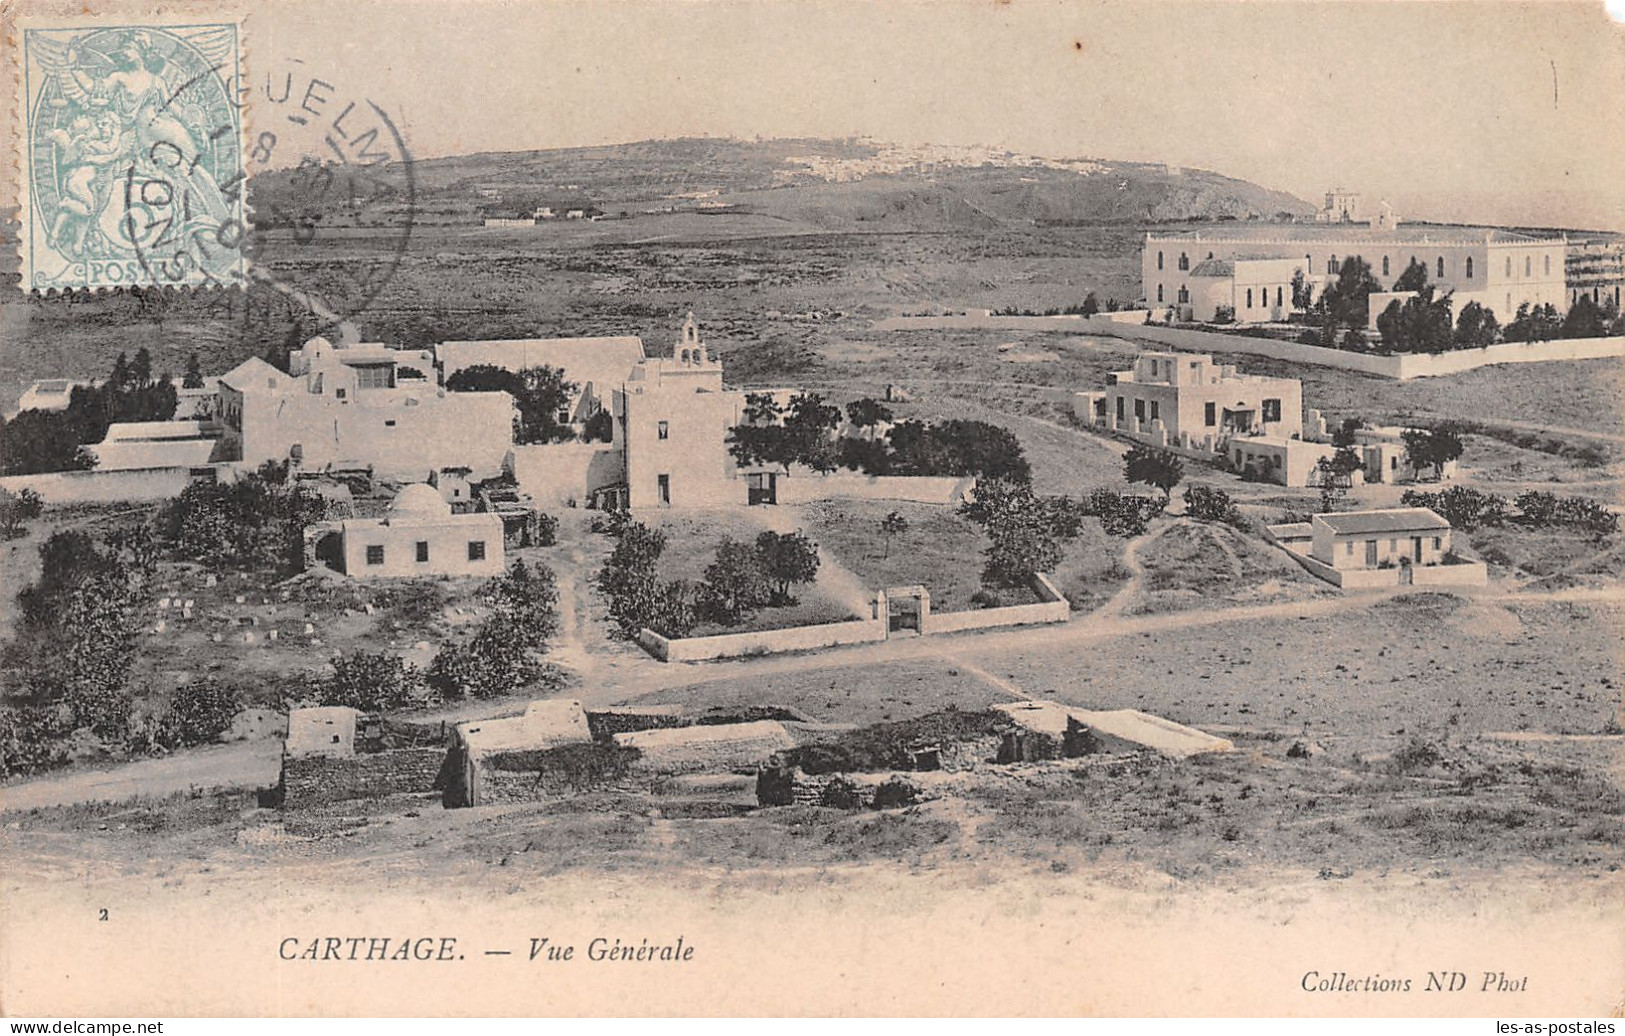 TUNISIE CARTHAGE - Tunisia